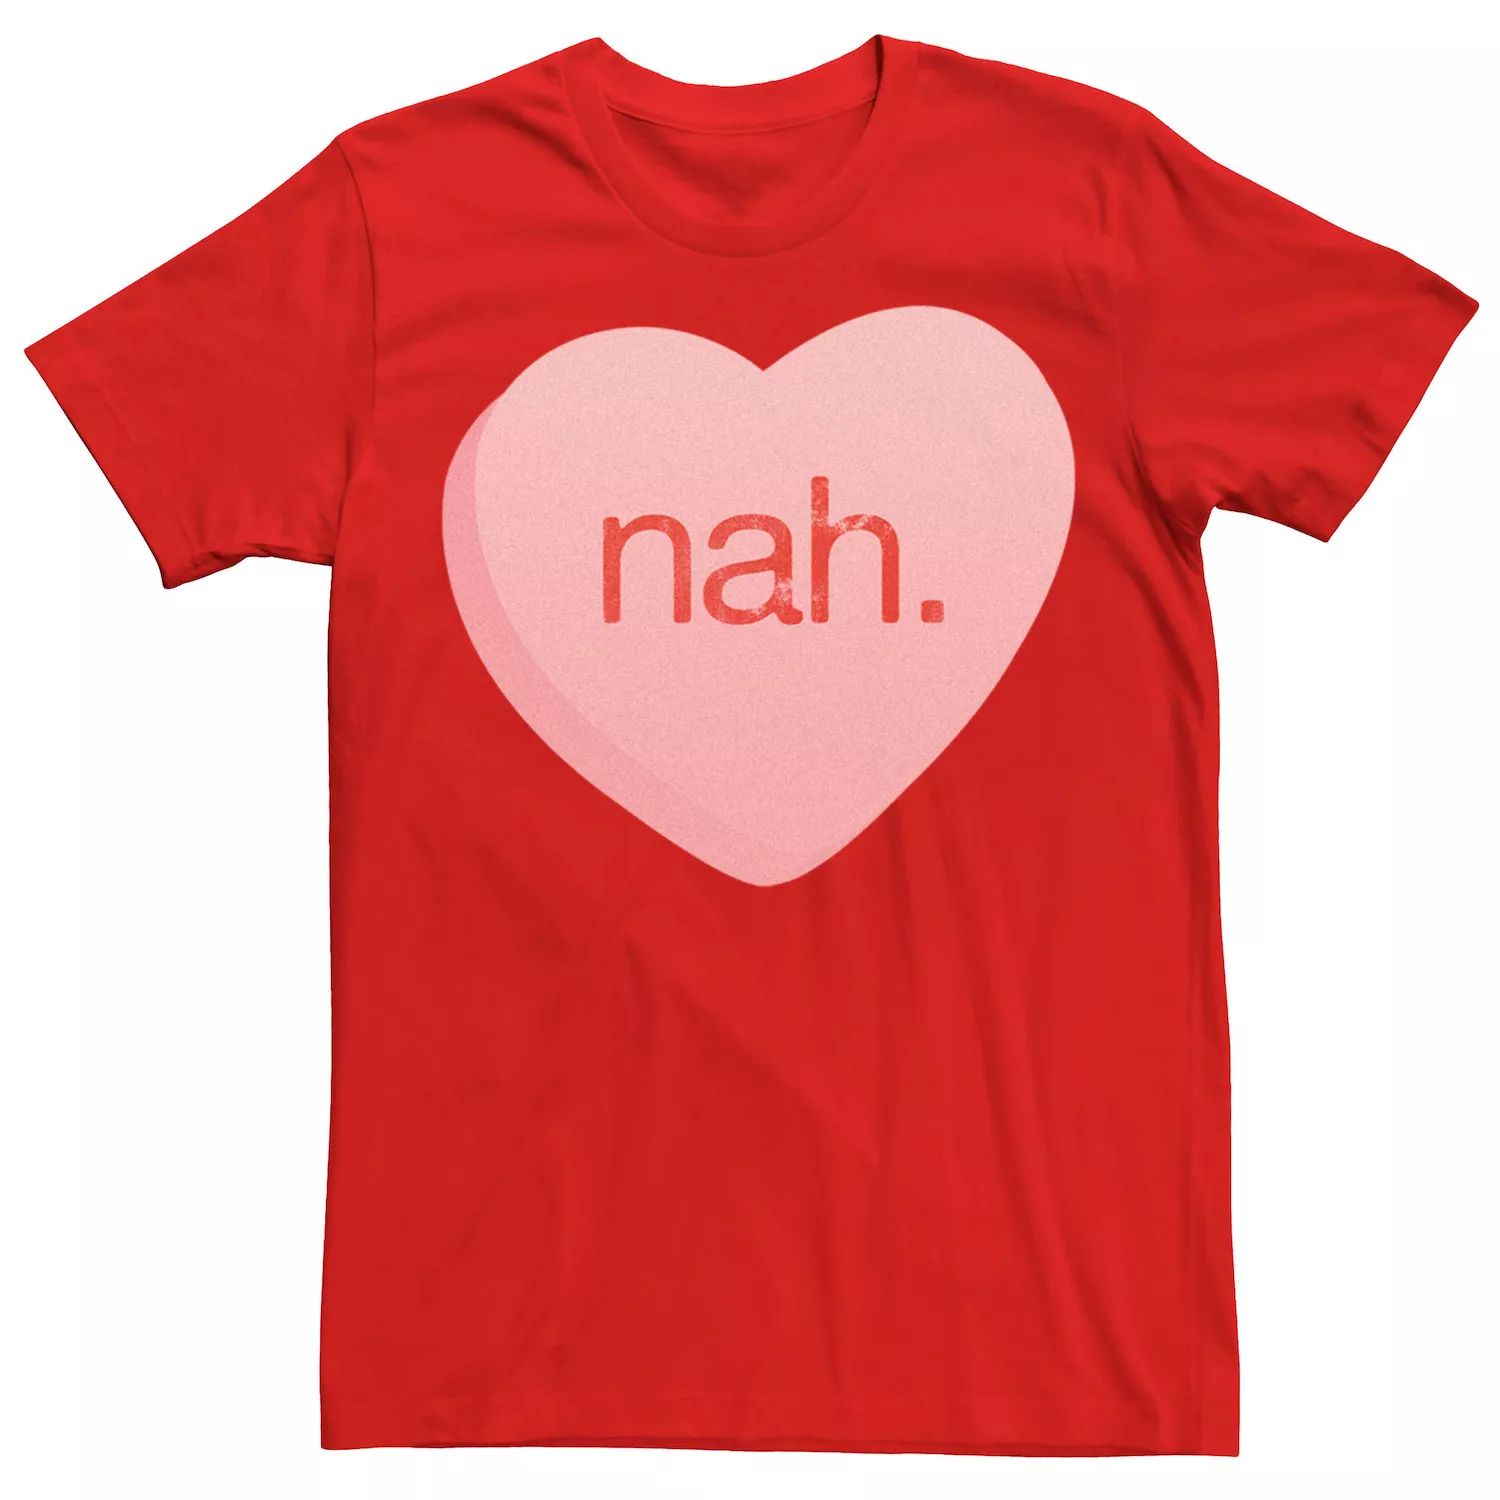 Мужская футболка Nah с большим розовым сердечком Licensed Character